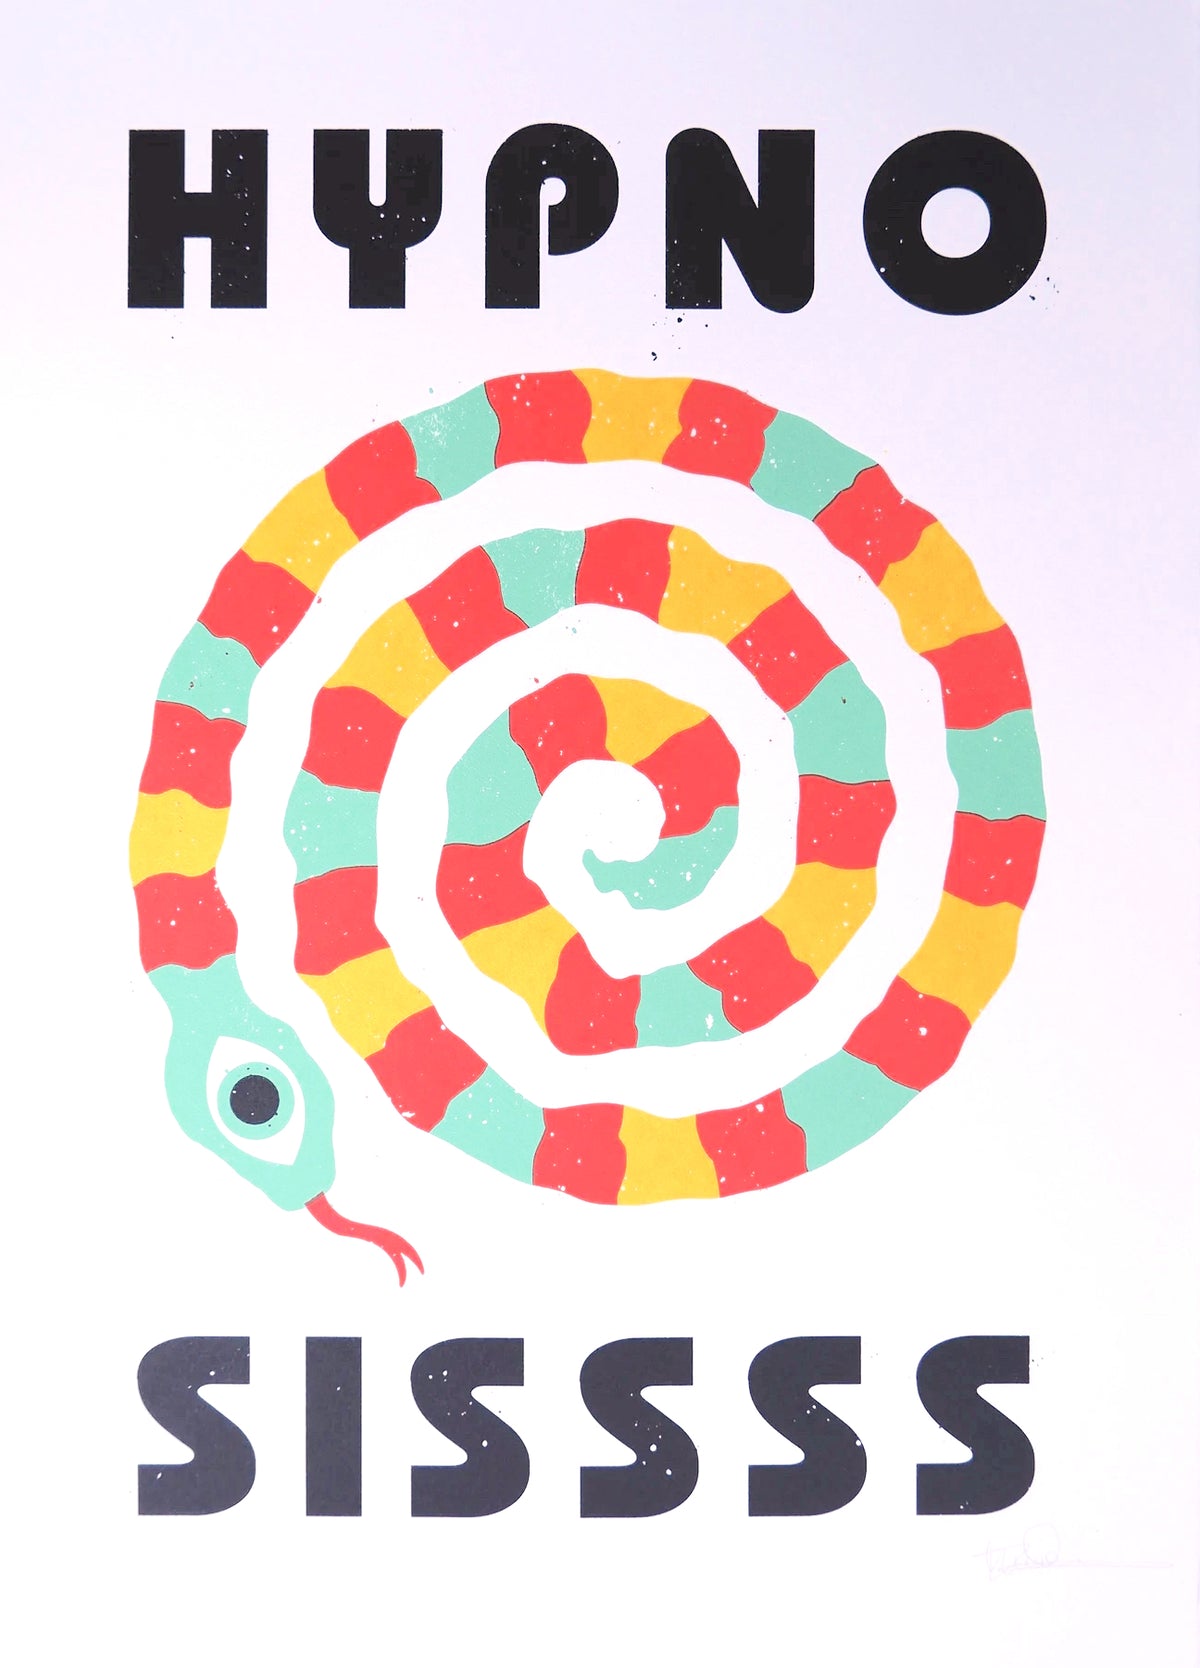 Hypnosisss by James Treadaway